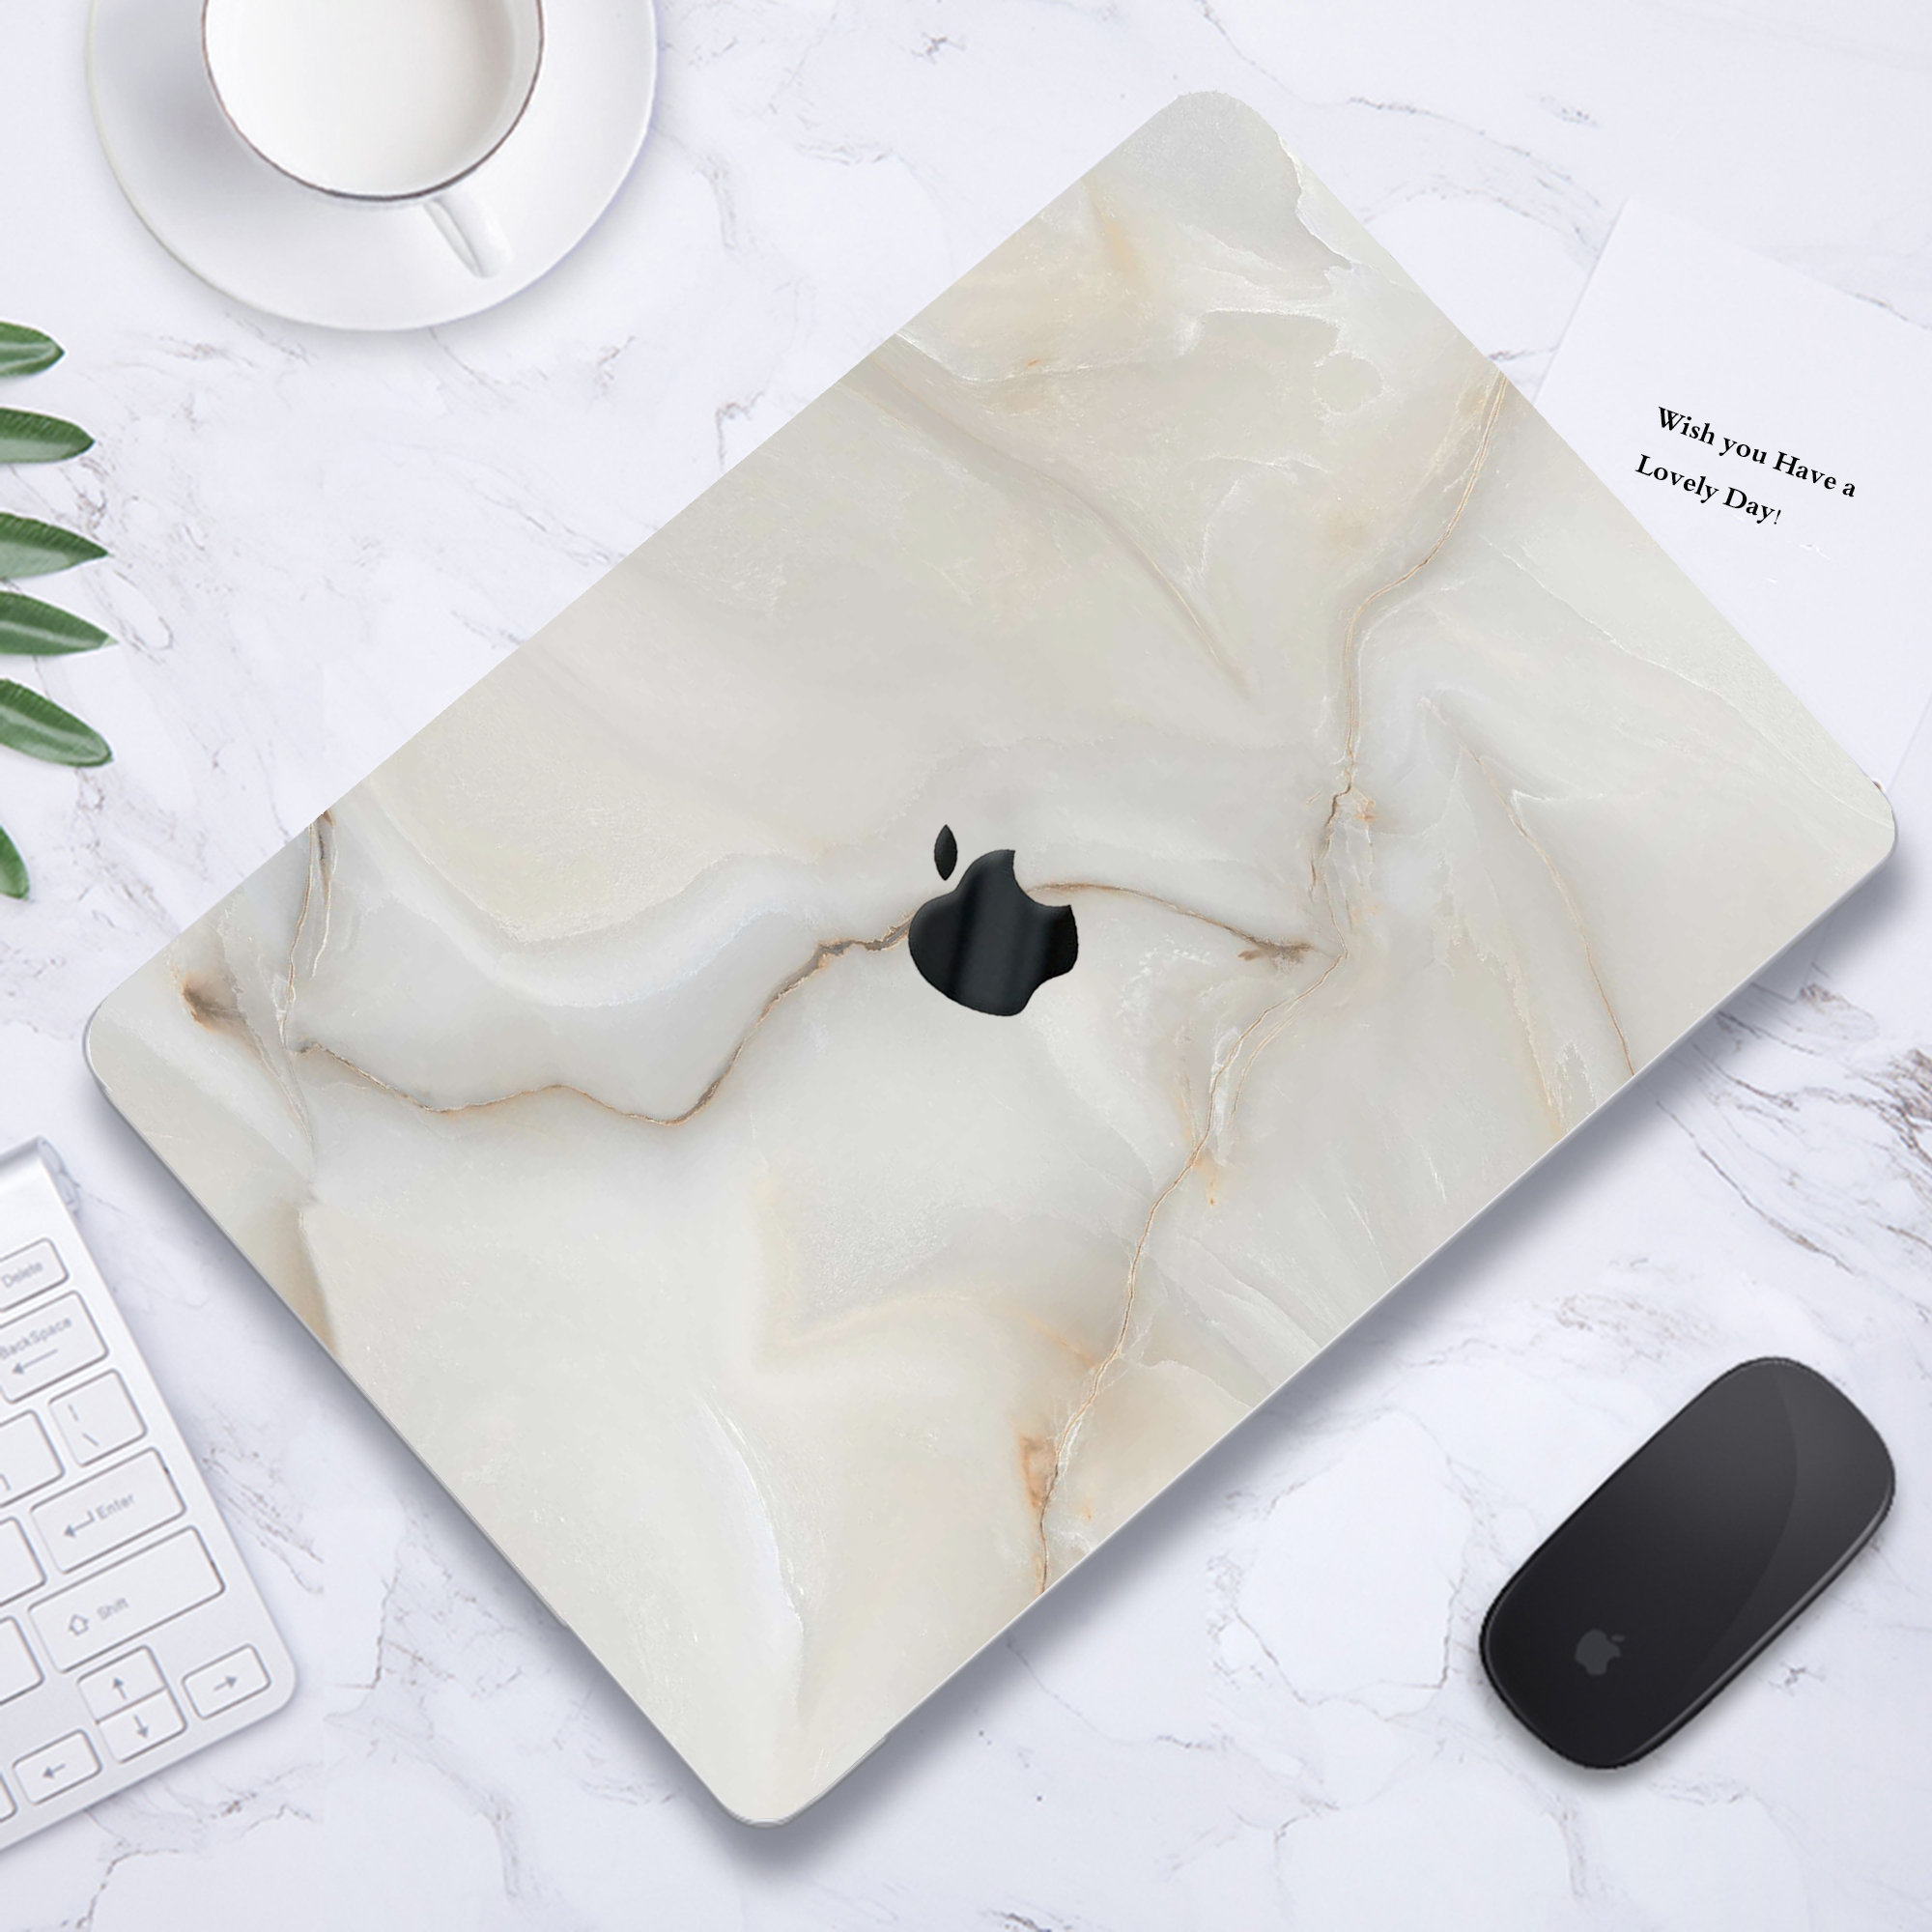 Leather Laptop Sleeve, MacBook Case, Tablet Cover, Hokusai Wave - Oberon  Design